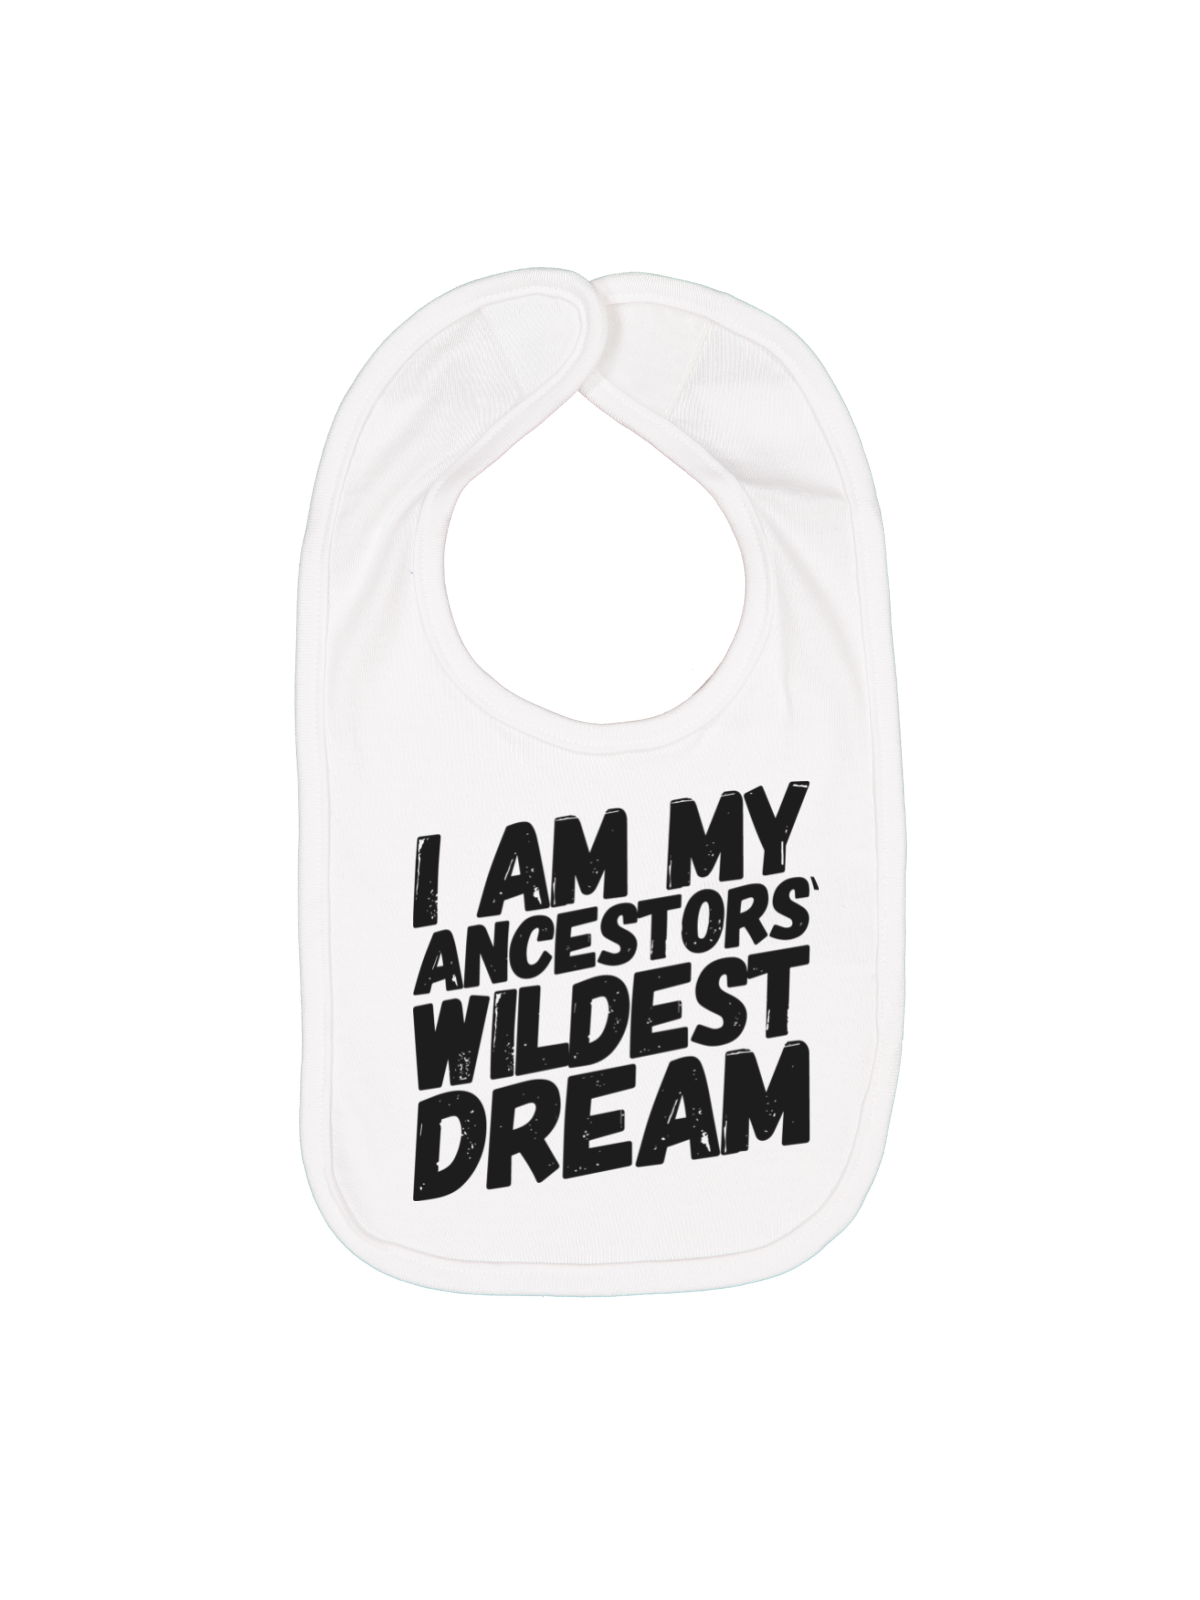 I Am My Ancestors' Wildest Dream Black History Baby Bib in White